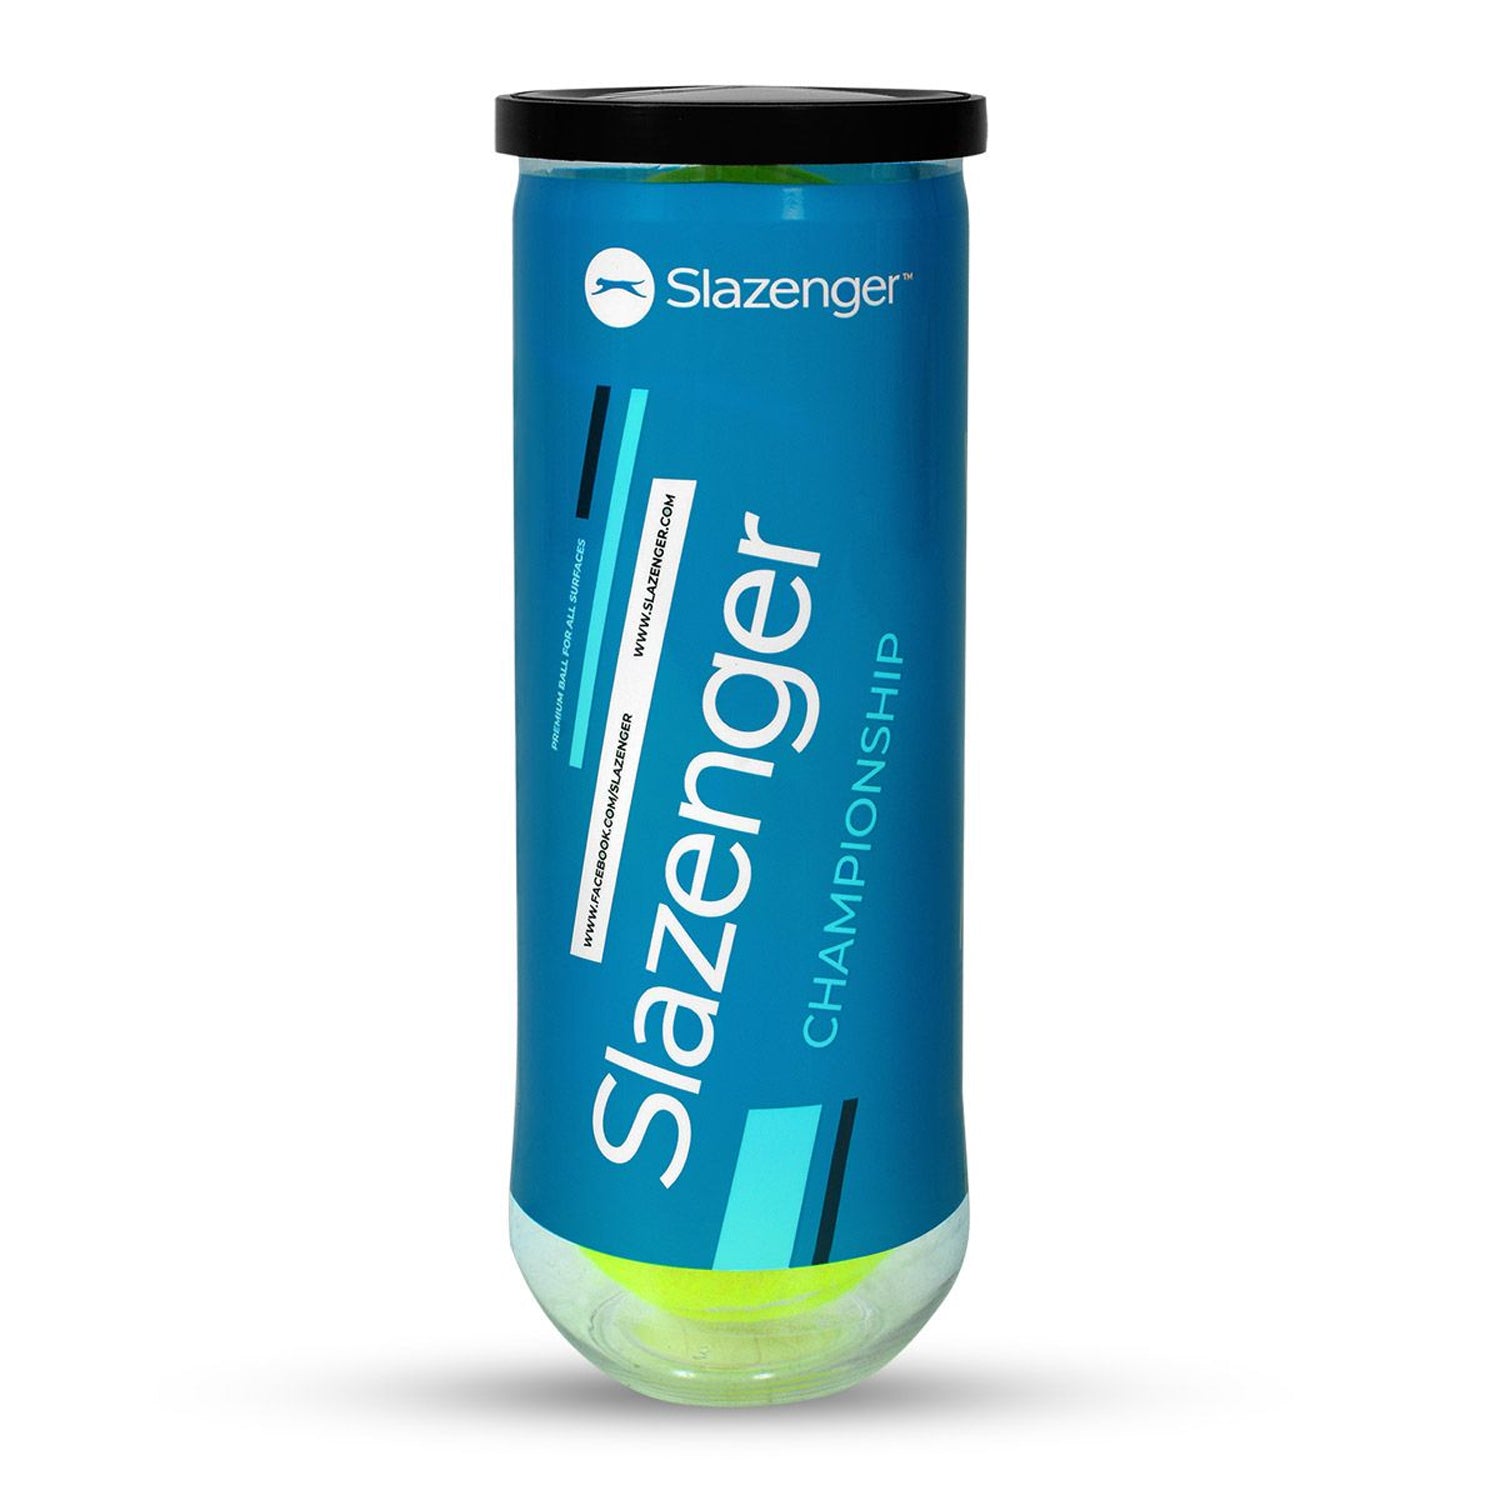 Slazenger Championship All Surface Tennis Balls Dozen (4 Cans) - Best Price online Prokicksports.com